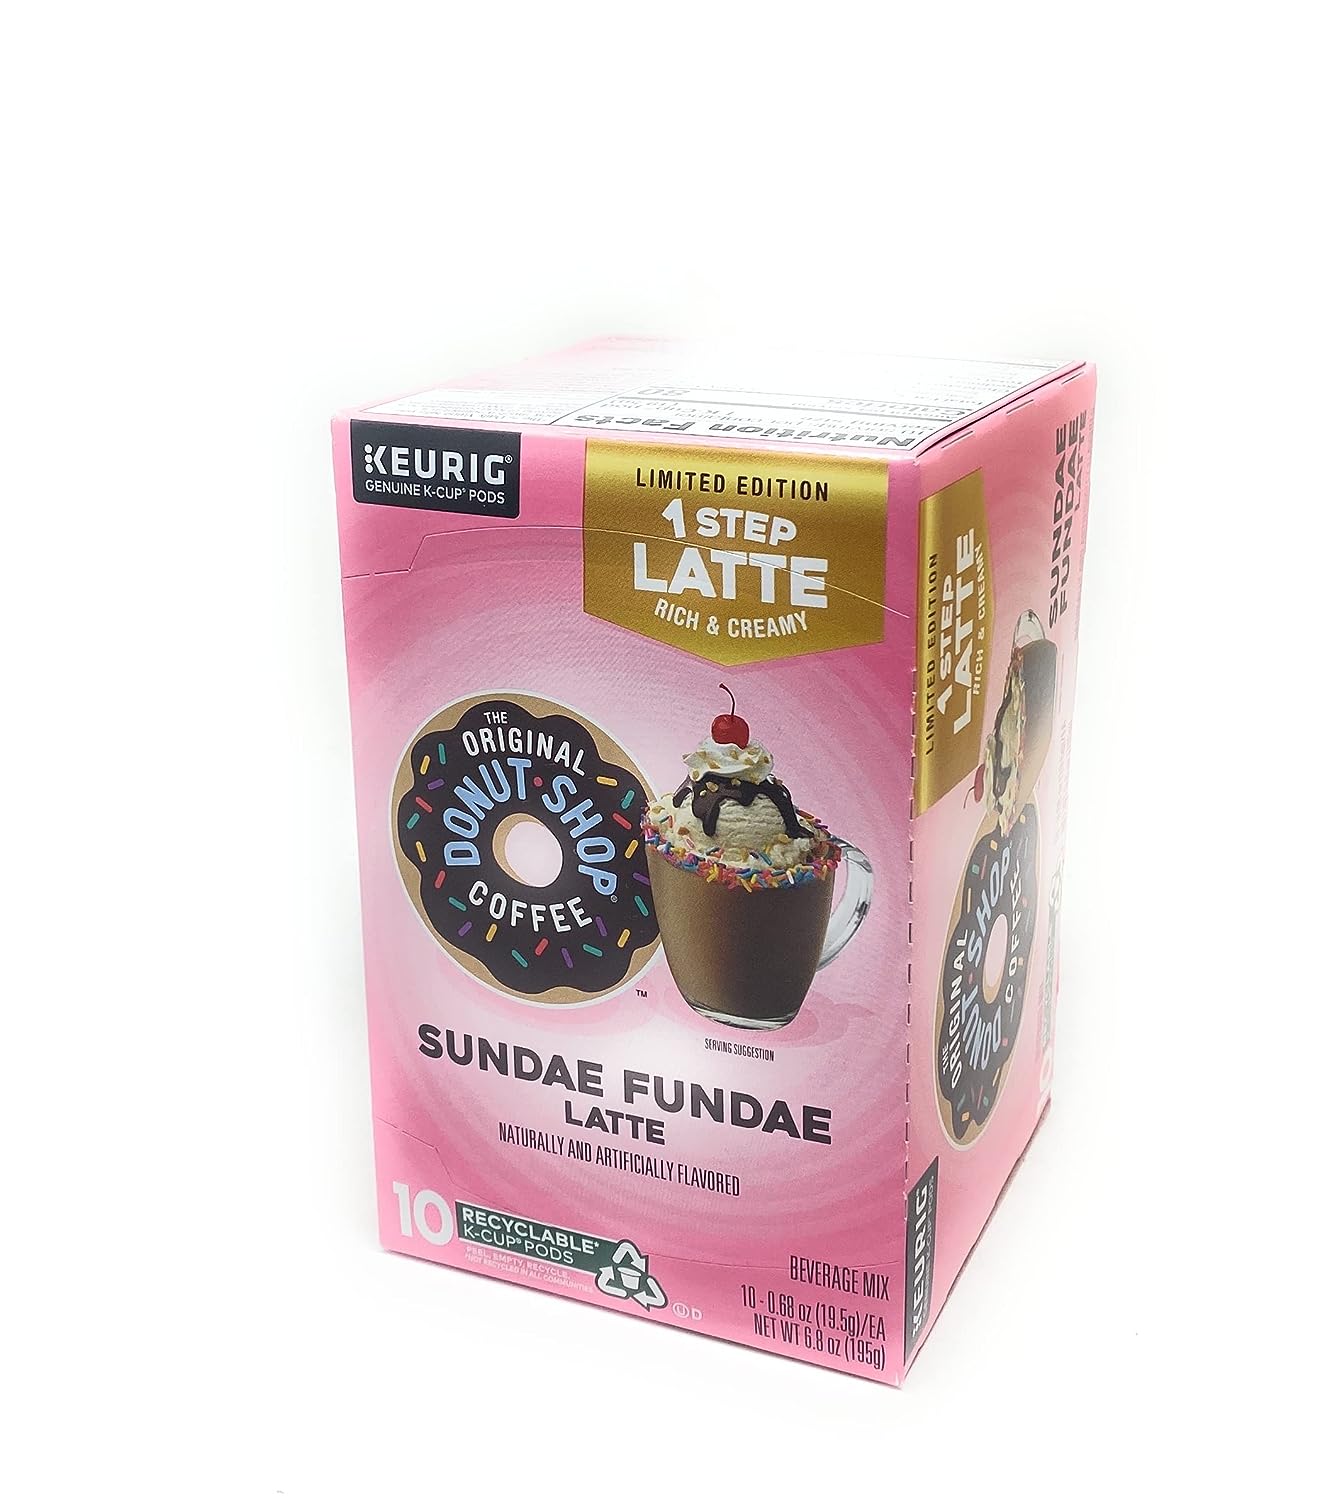 The Original Donut Shop Coffee Sundae Fundae Latte K-Cups - 10 pods - 1 box